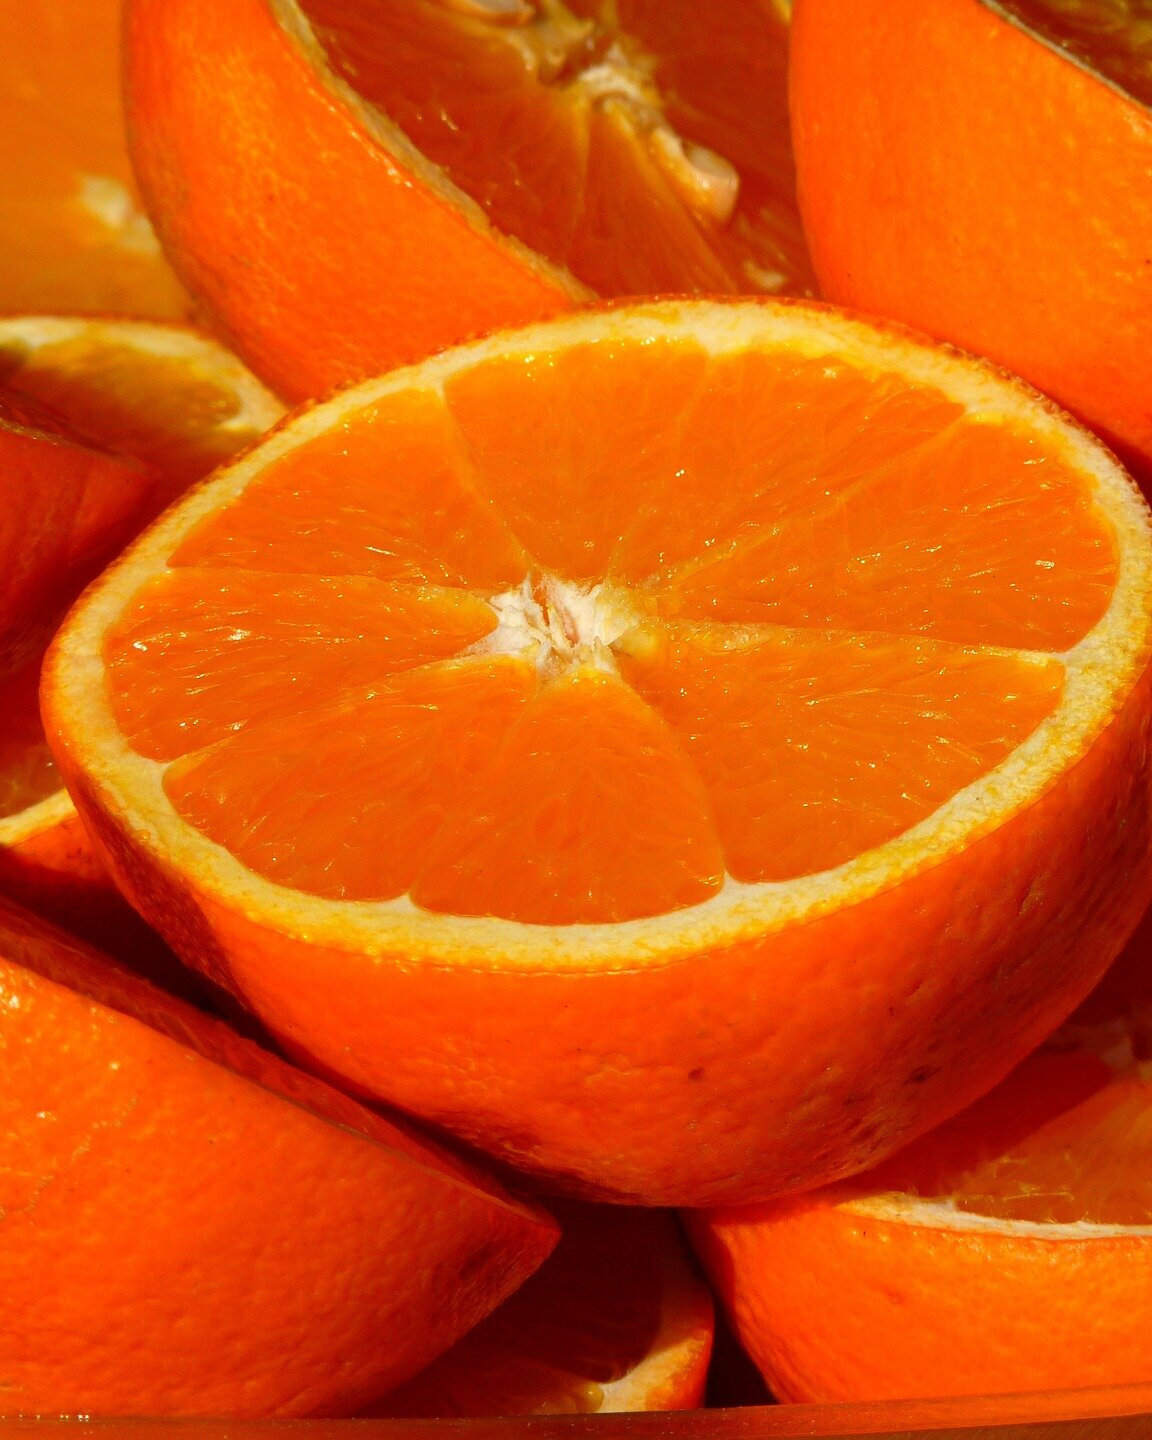 oranges-15046_1920.jpg